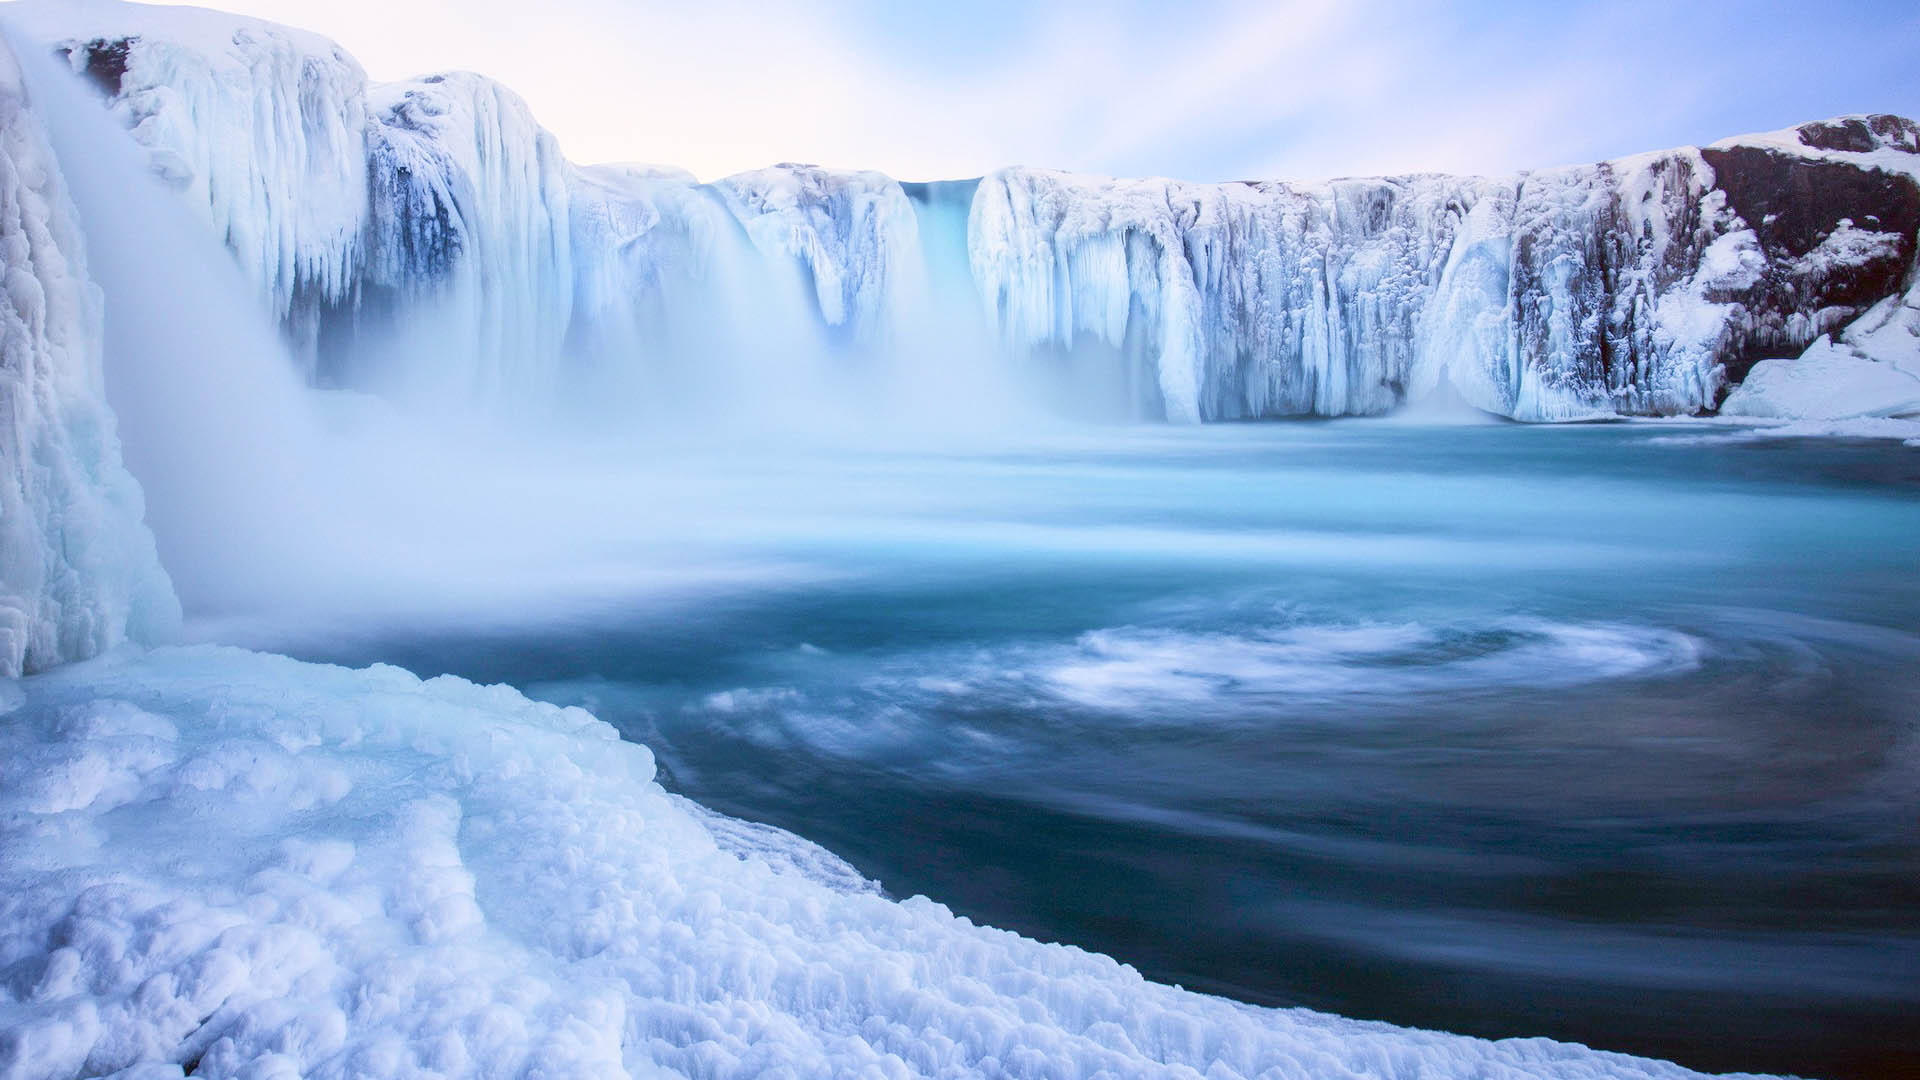 4000 Free Glacier  Snow Images  Pixabay